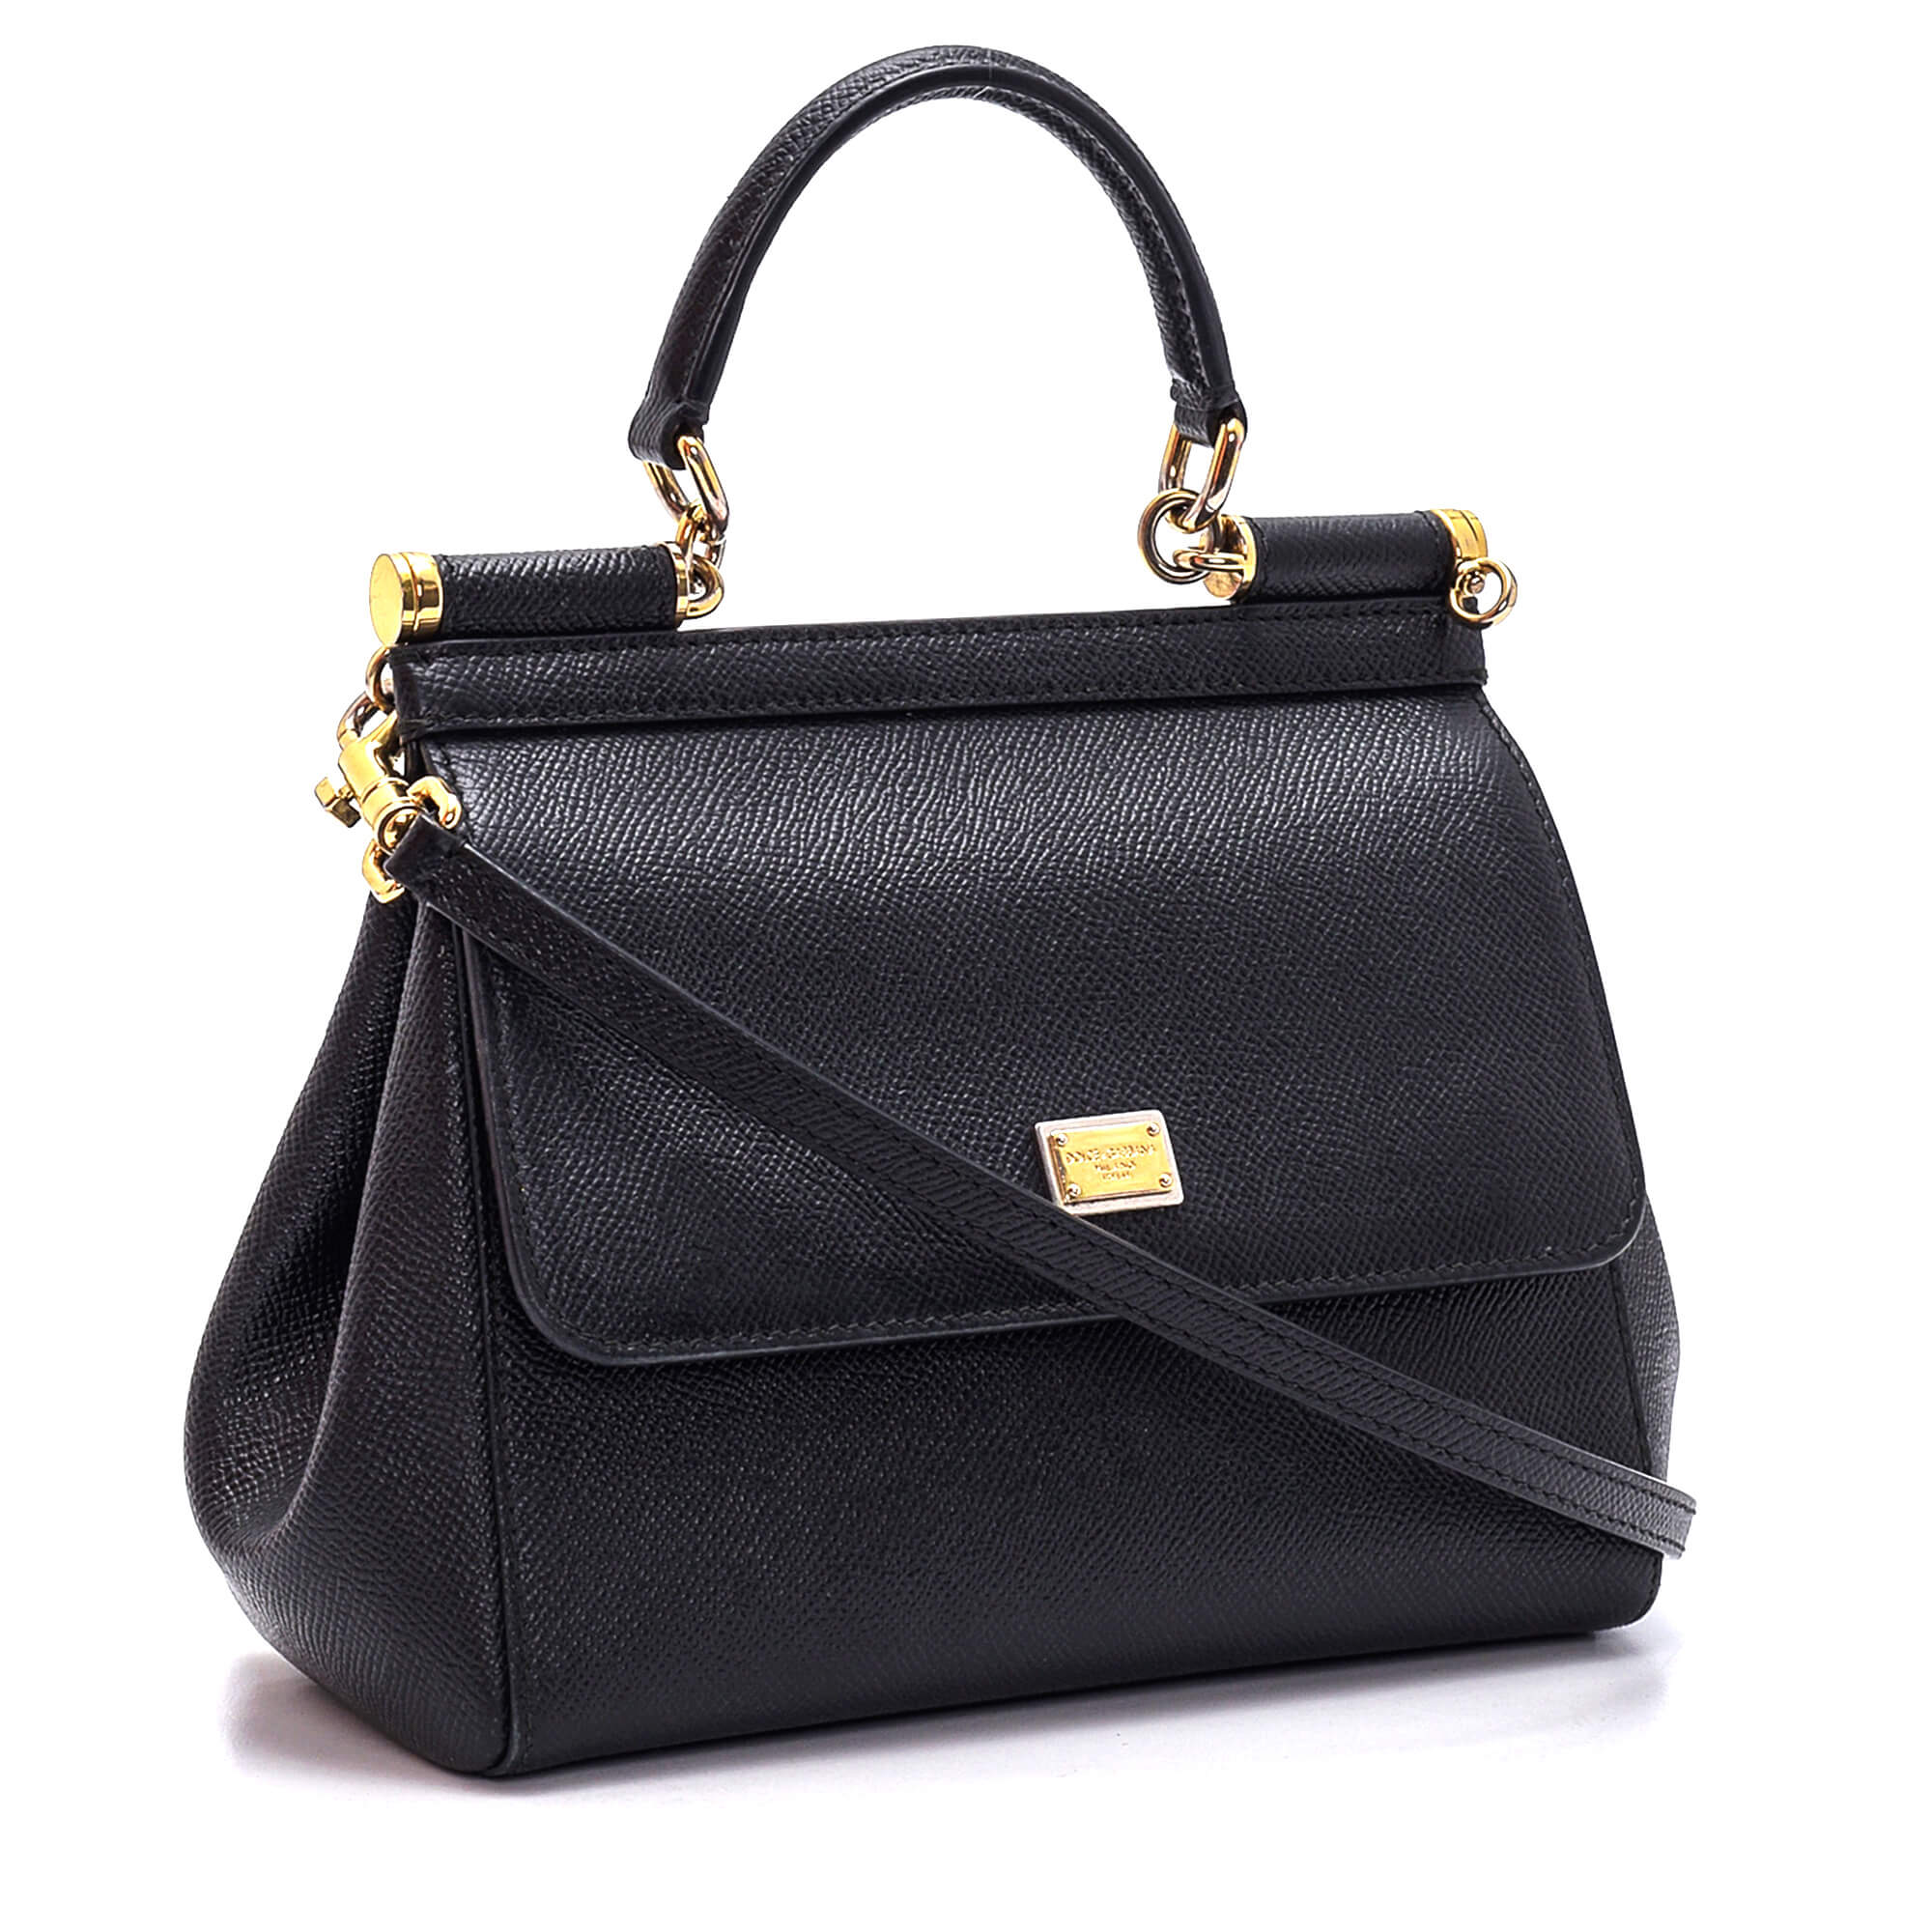 Dolce Gabbana - Black Leather Small Sicily Bag 